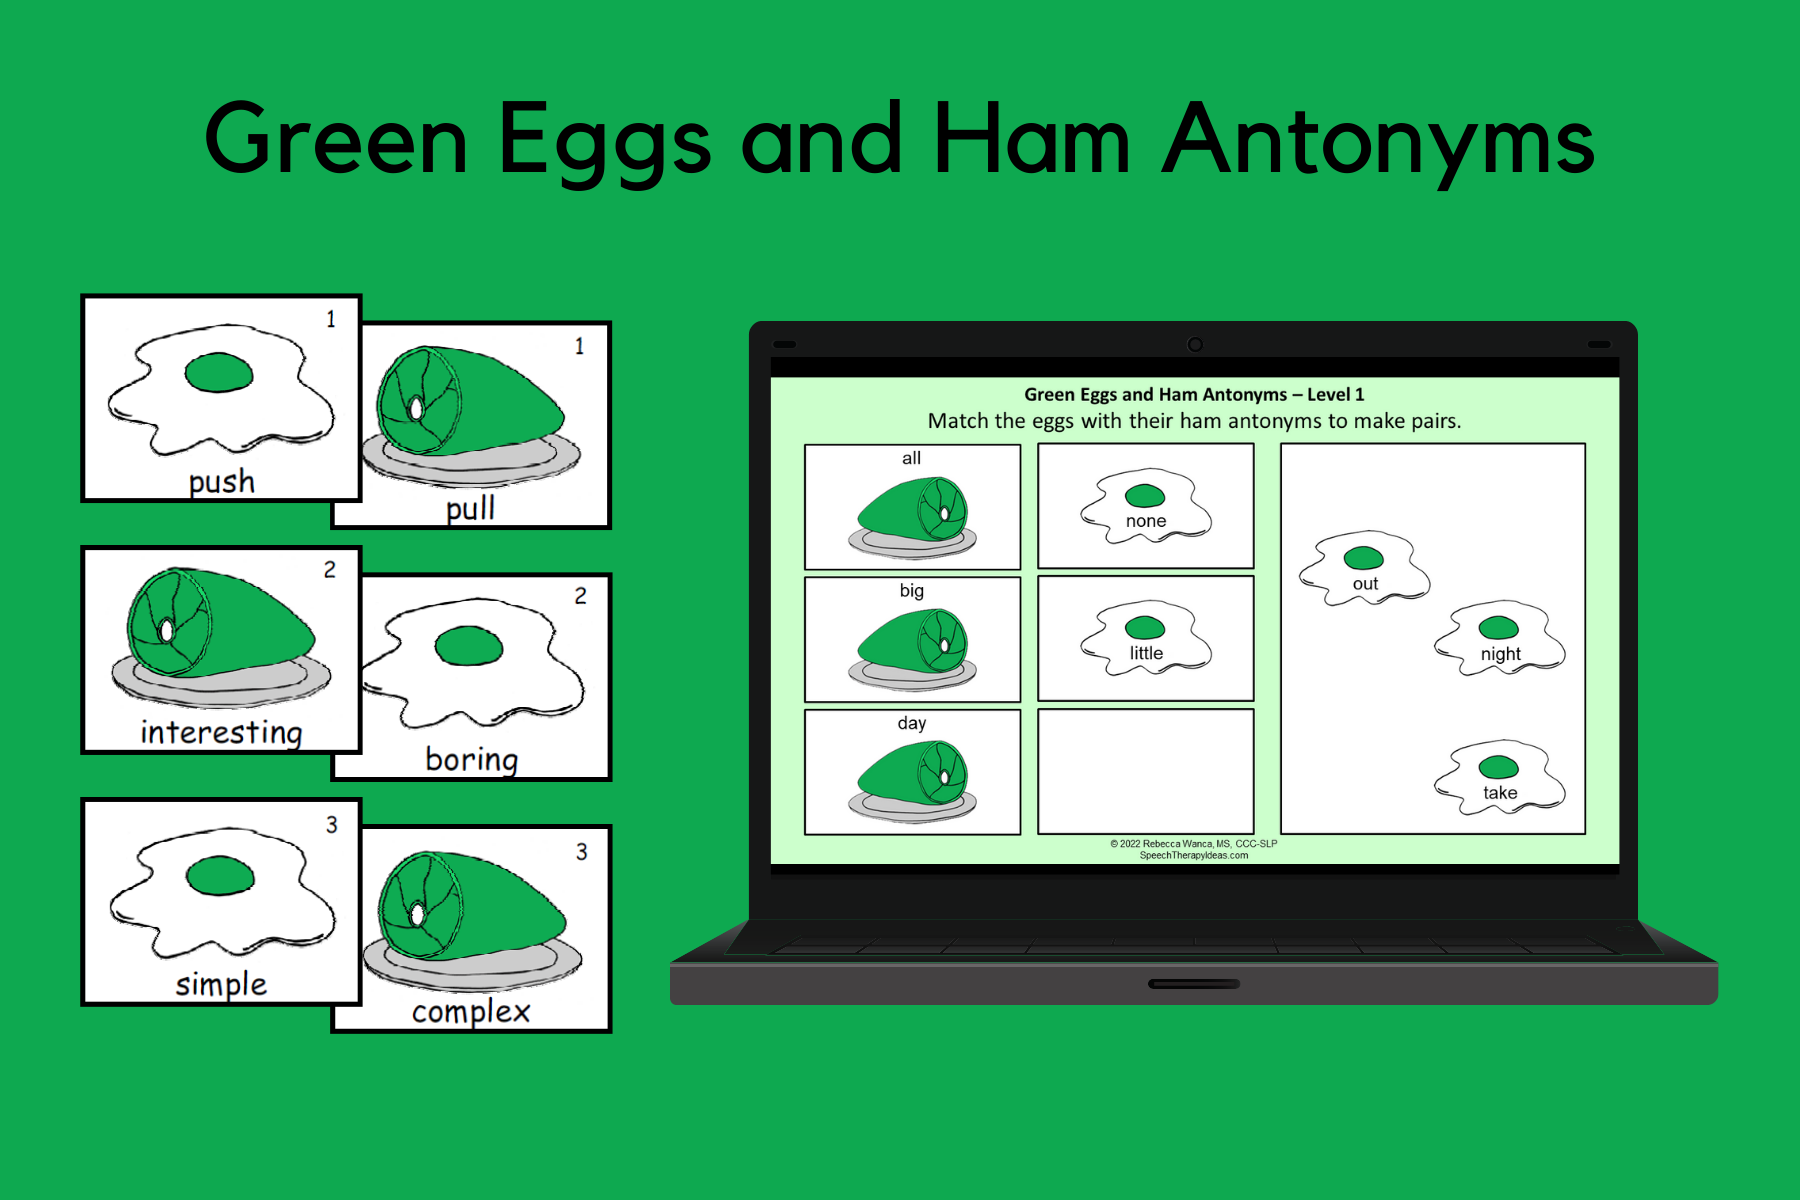 Green Eggs and Ham Antonyms